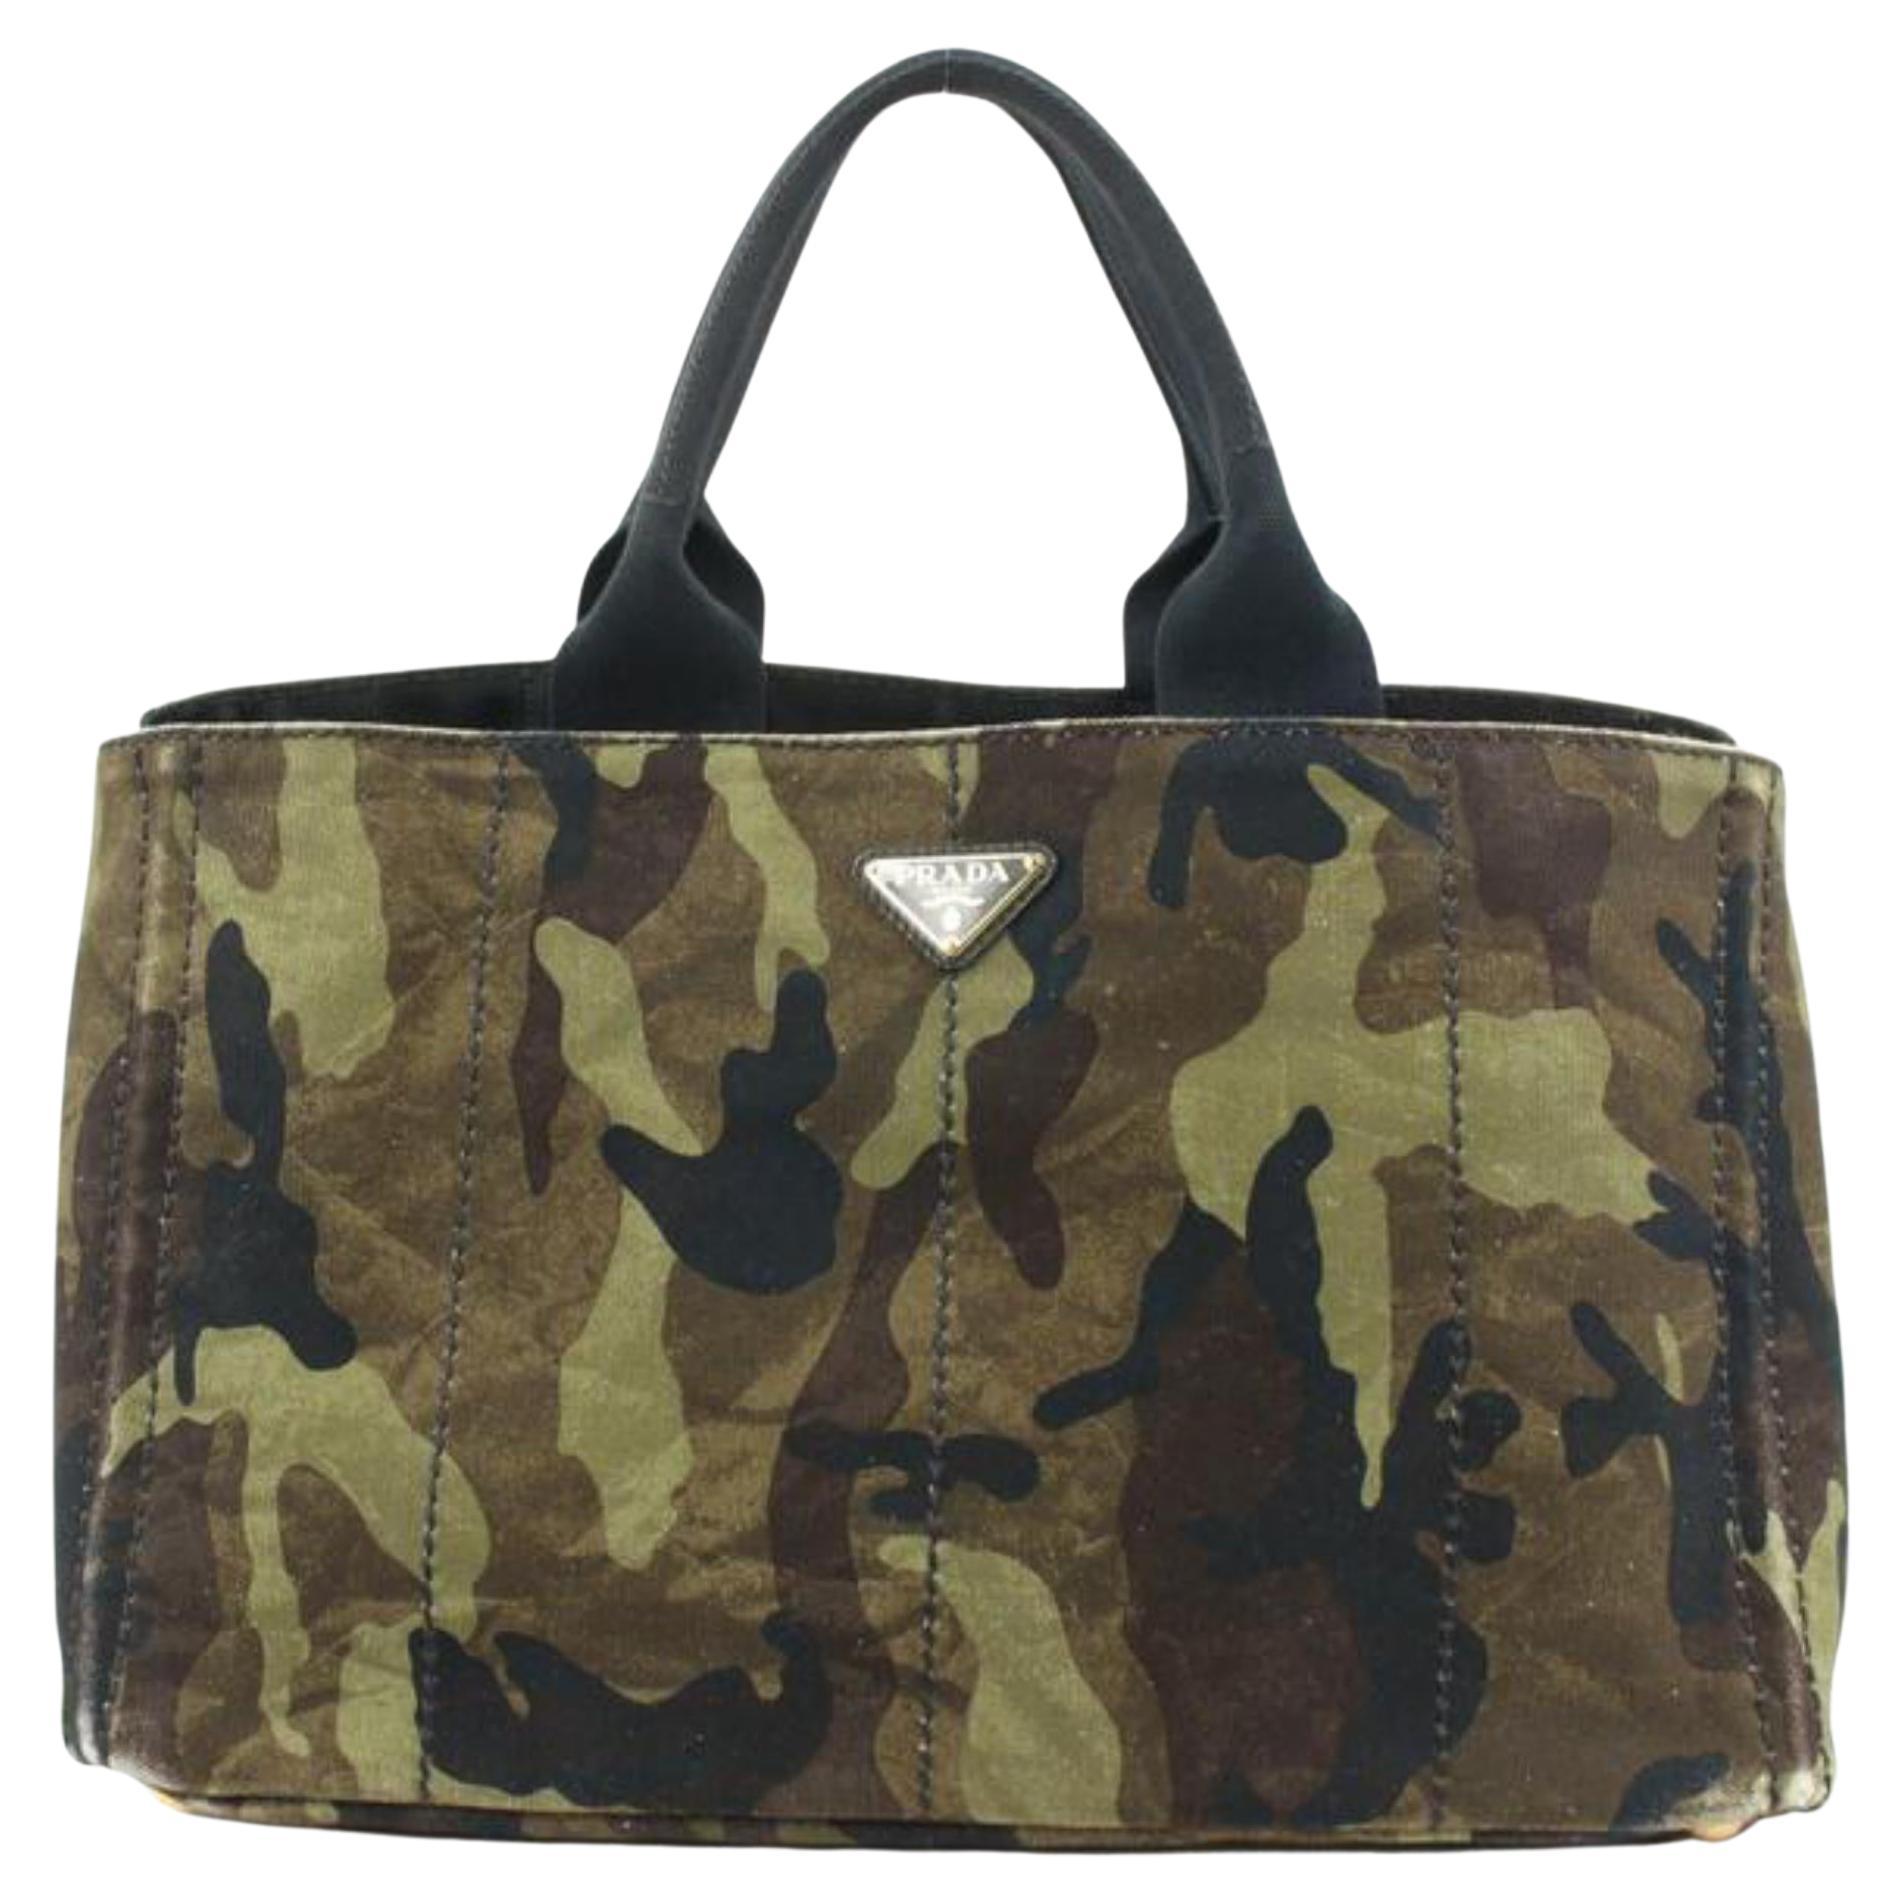 Prada Camouflage Canapa Tote Camo Bag 70p32s